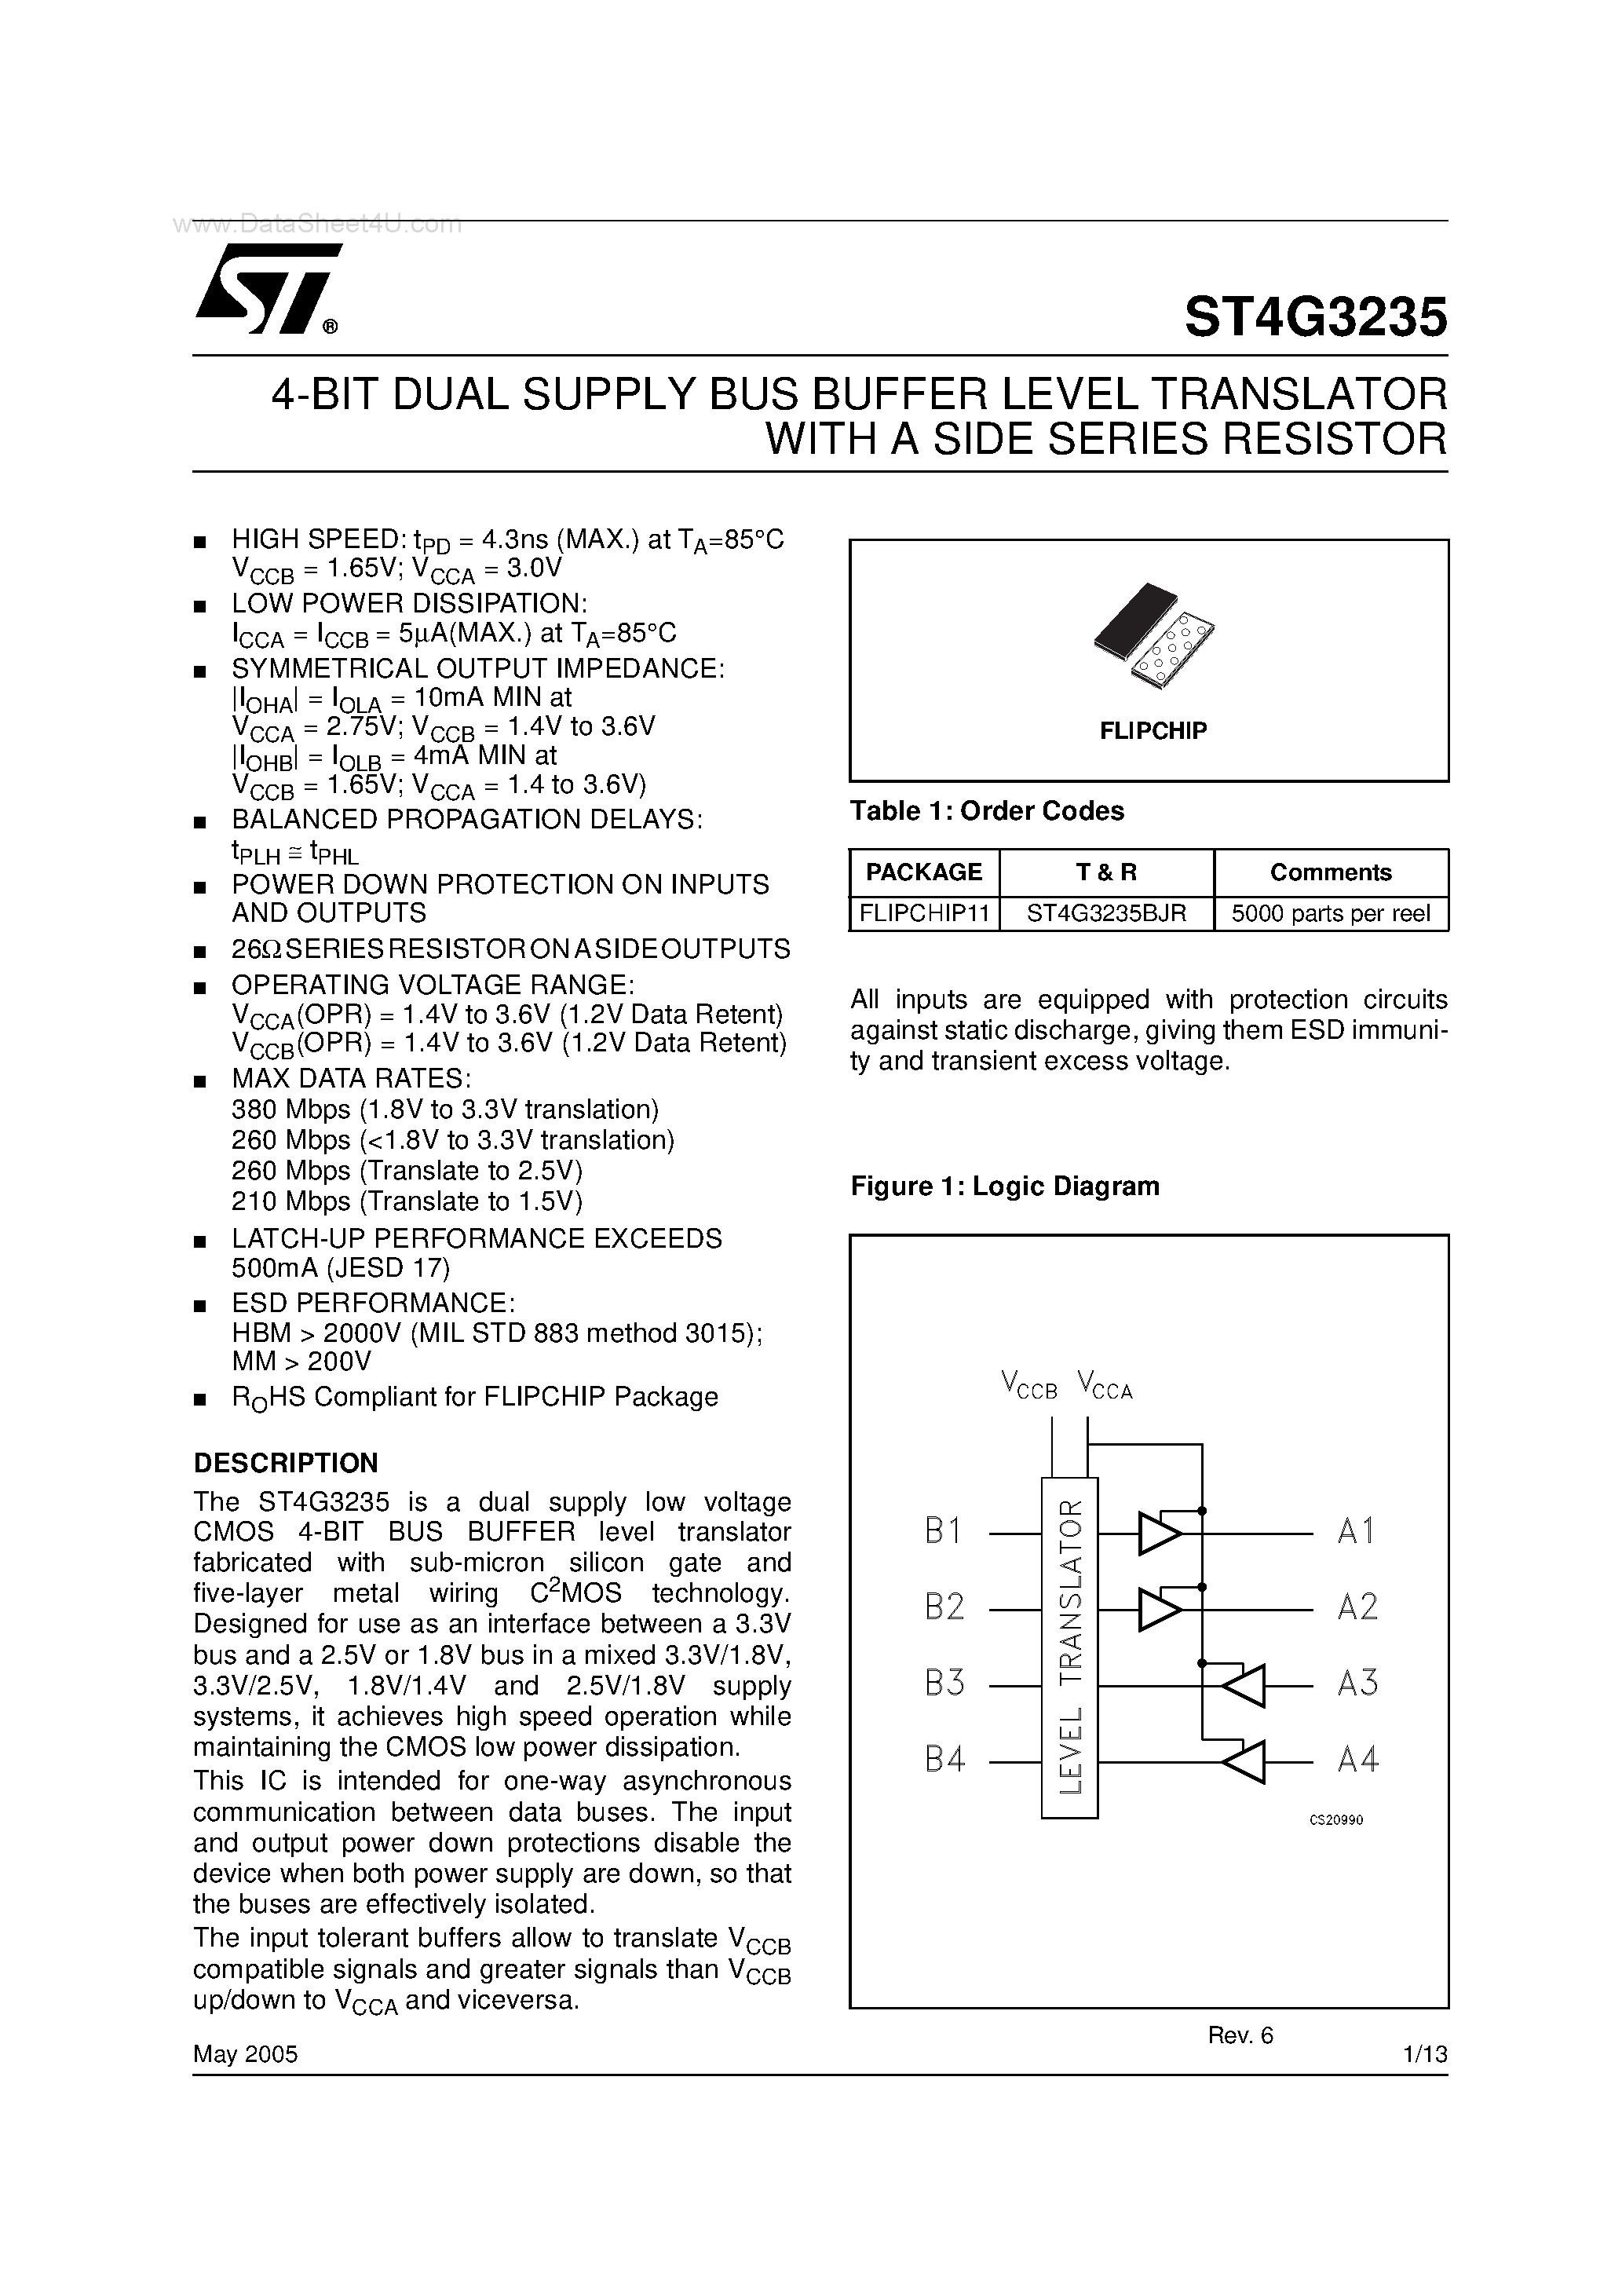 Datasheet ST4G3235 - 4-BIT DUAL SUPPLY BUS BUFFER LEVEL TRANSLATOR page 1